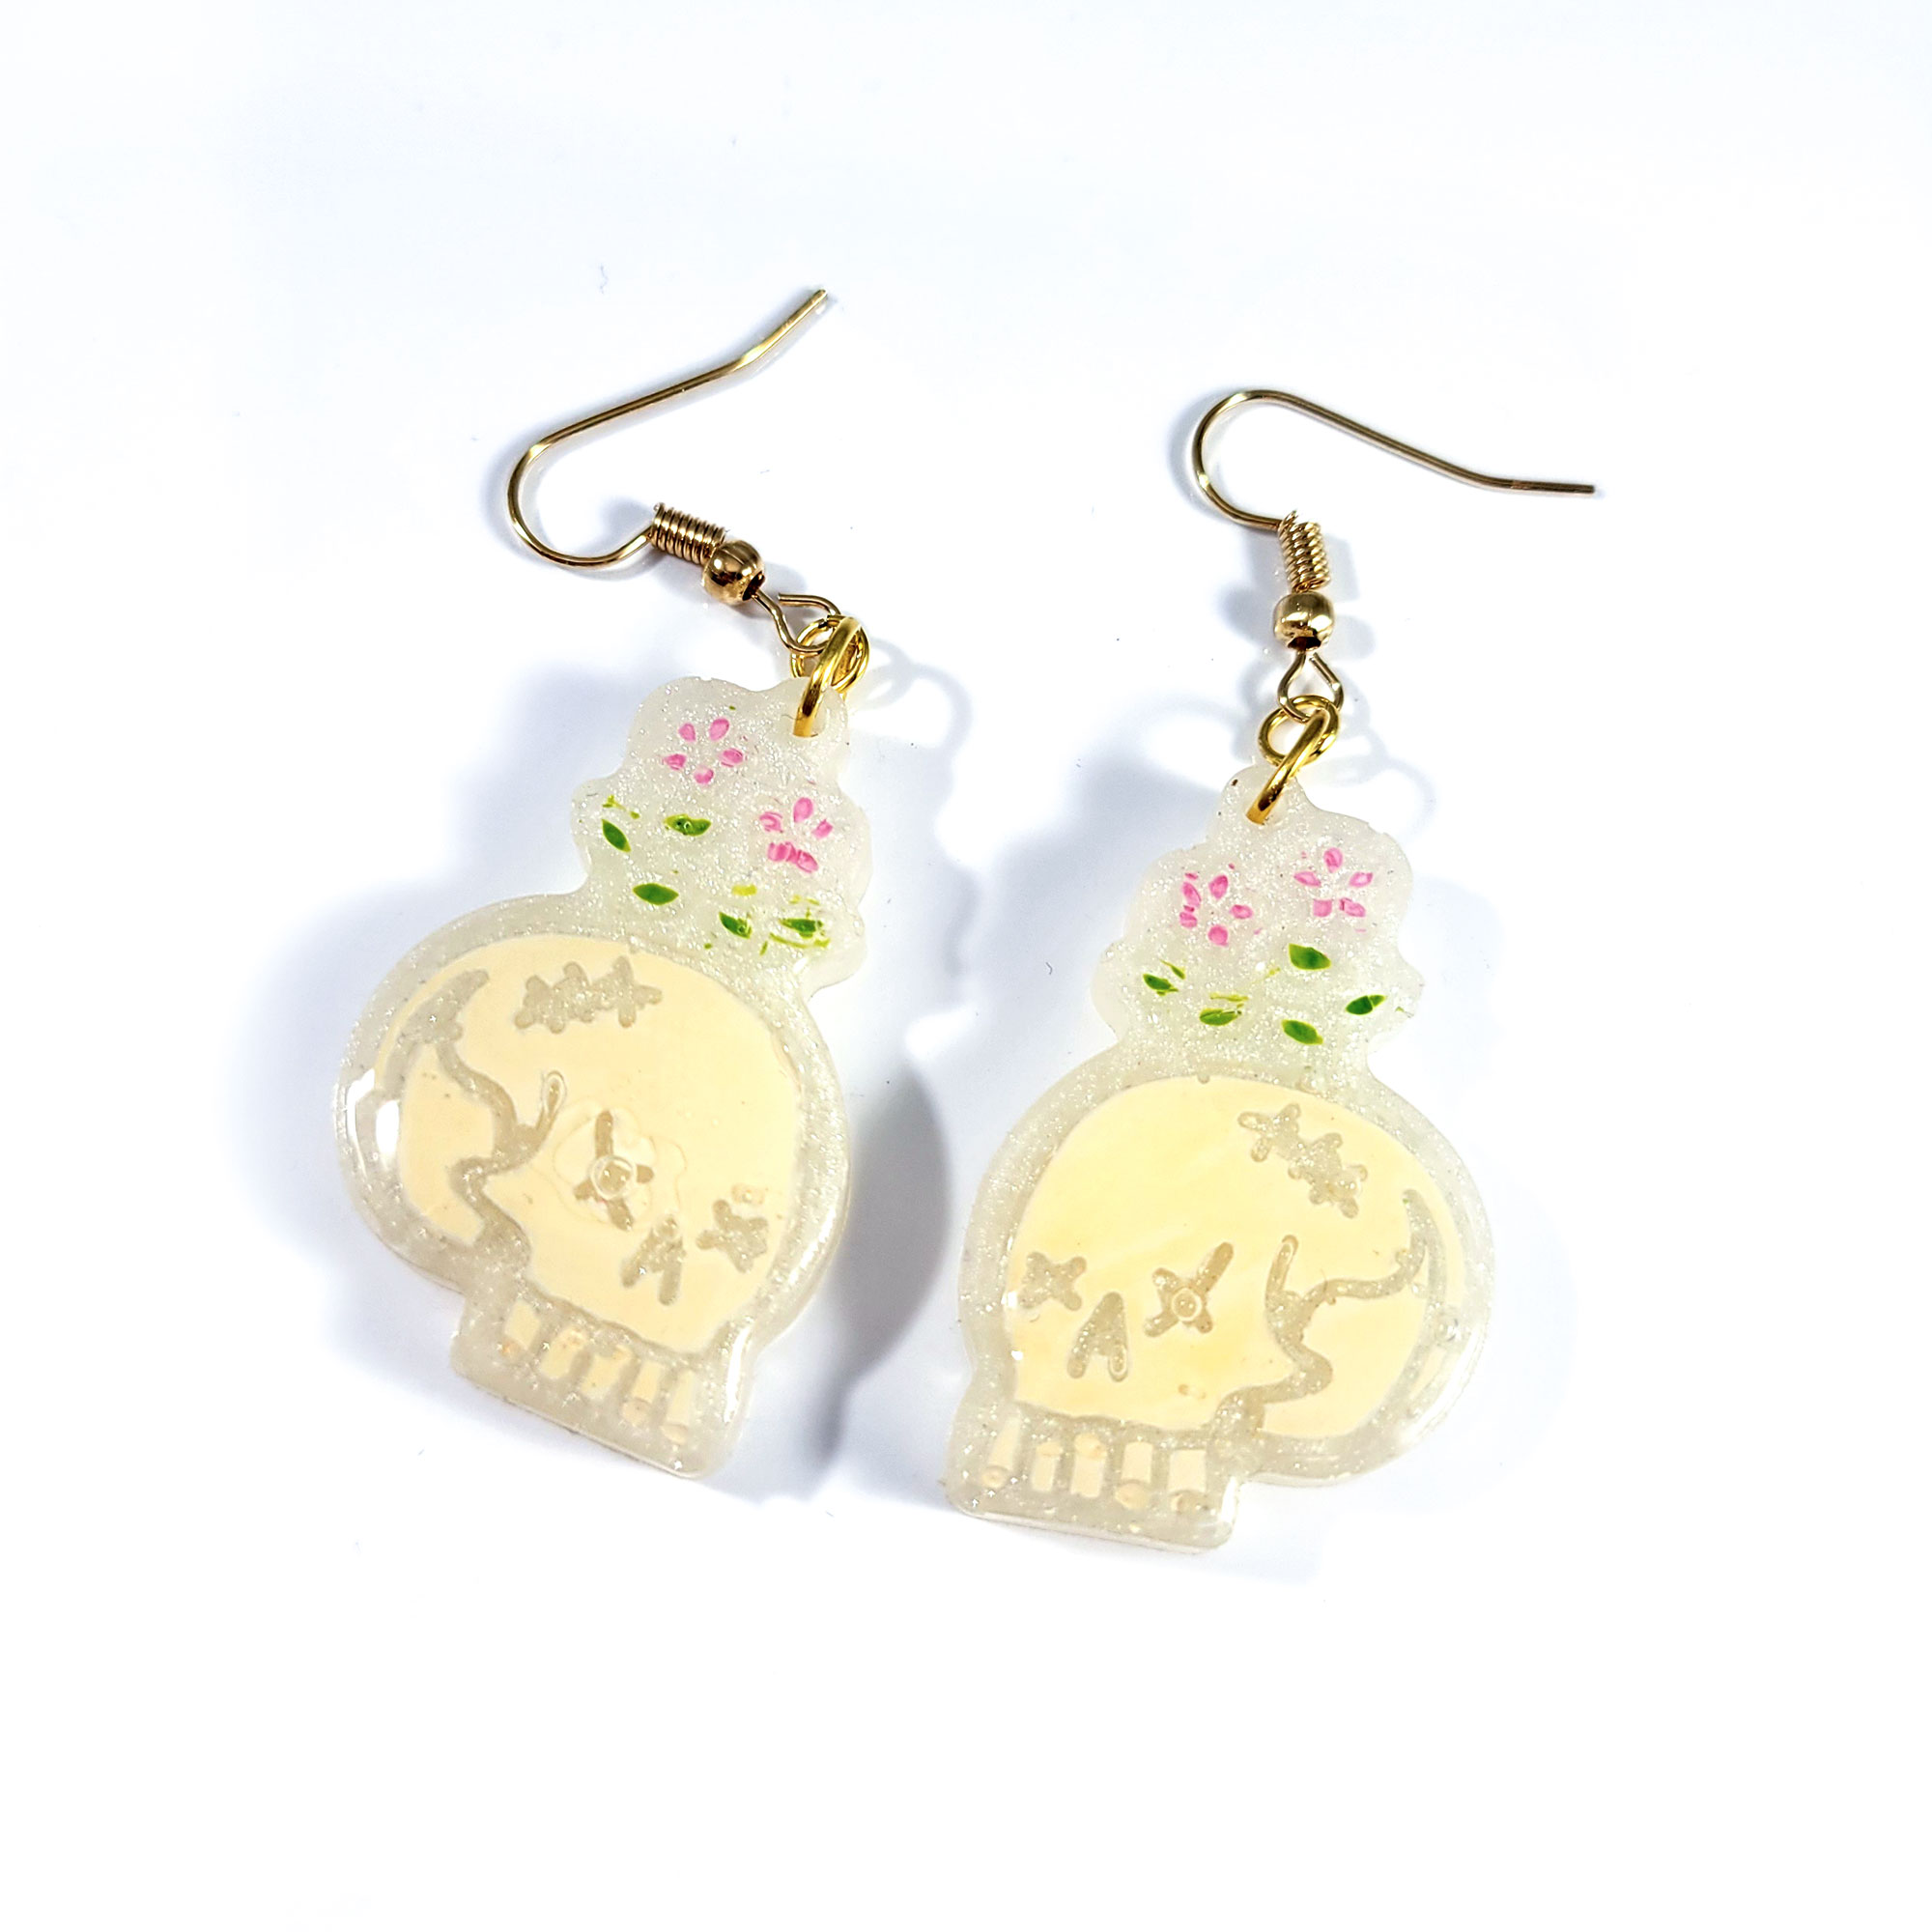 Life from Death Skull Earrings by Wilde Designs